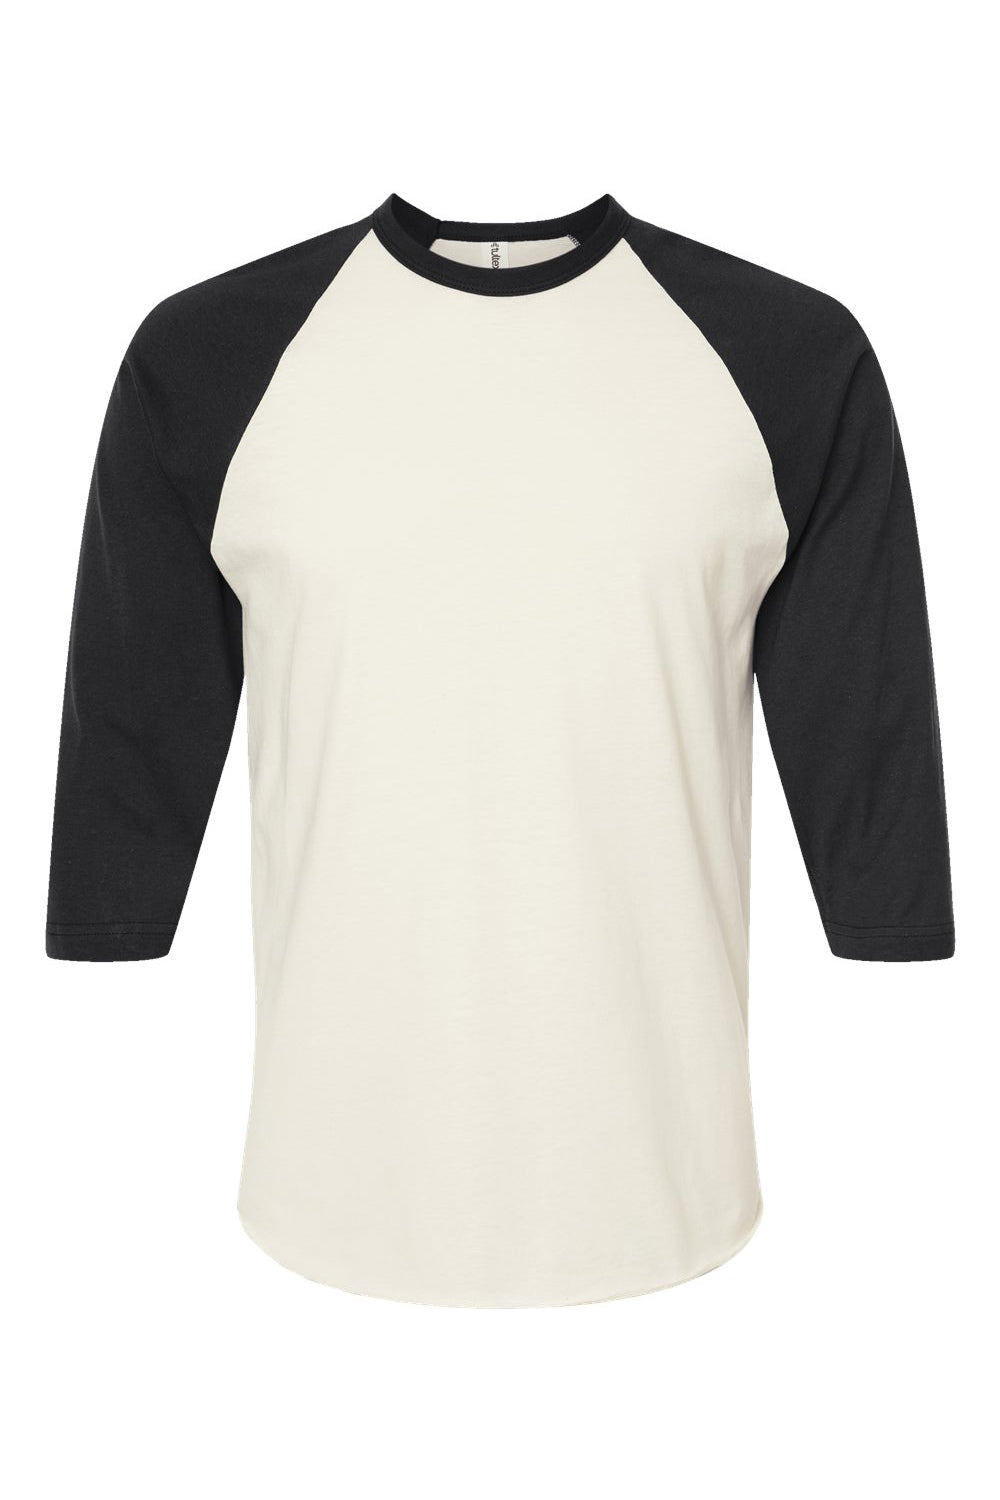 Tultex 245 Mens Fine Jersey Raglan 3/4 Sleeve Crewneck T-Shirt Vintage White/Black Flat Front